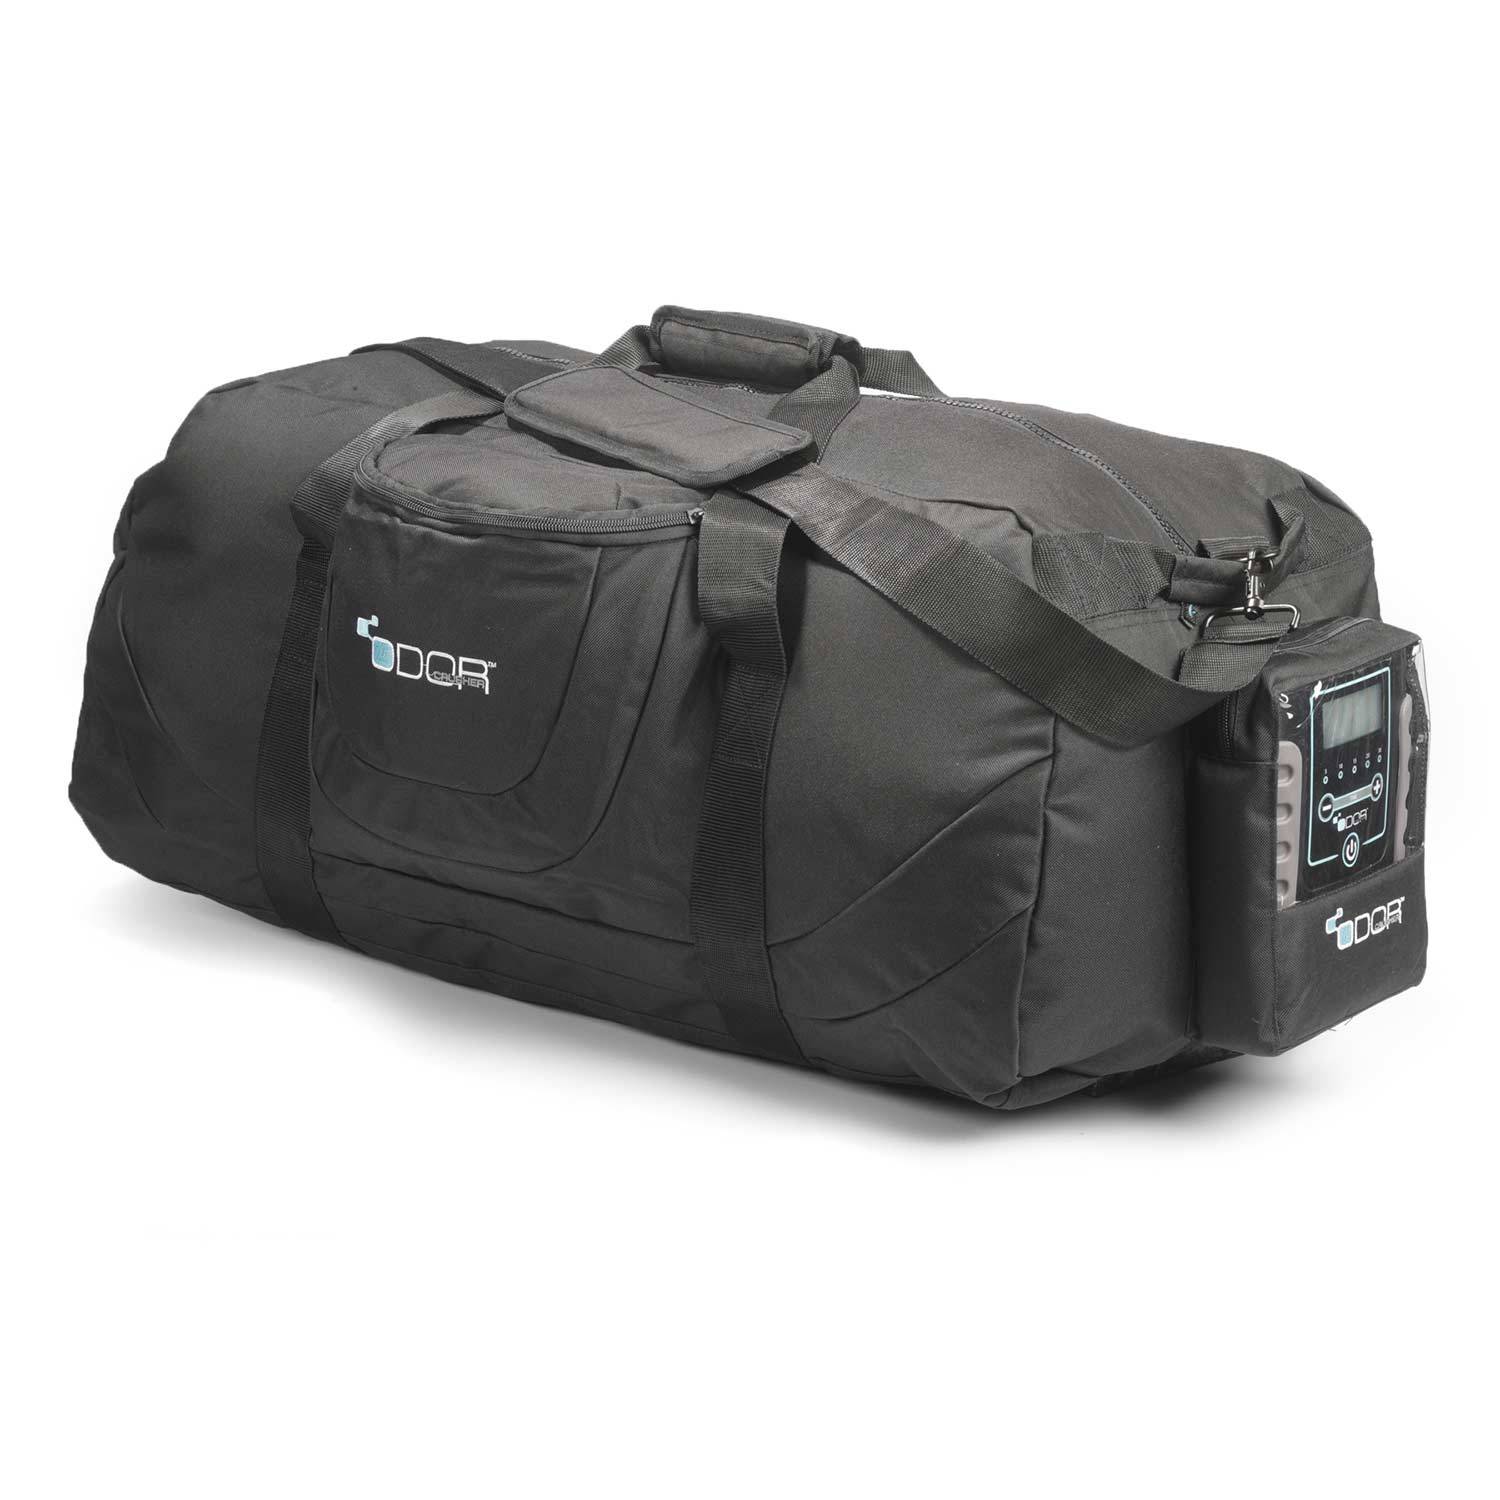 Odor Crusher Tactical Large Gear Bag